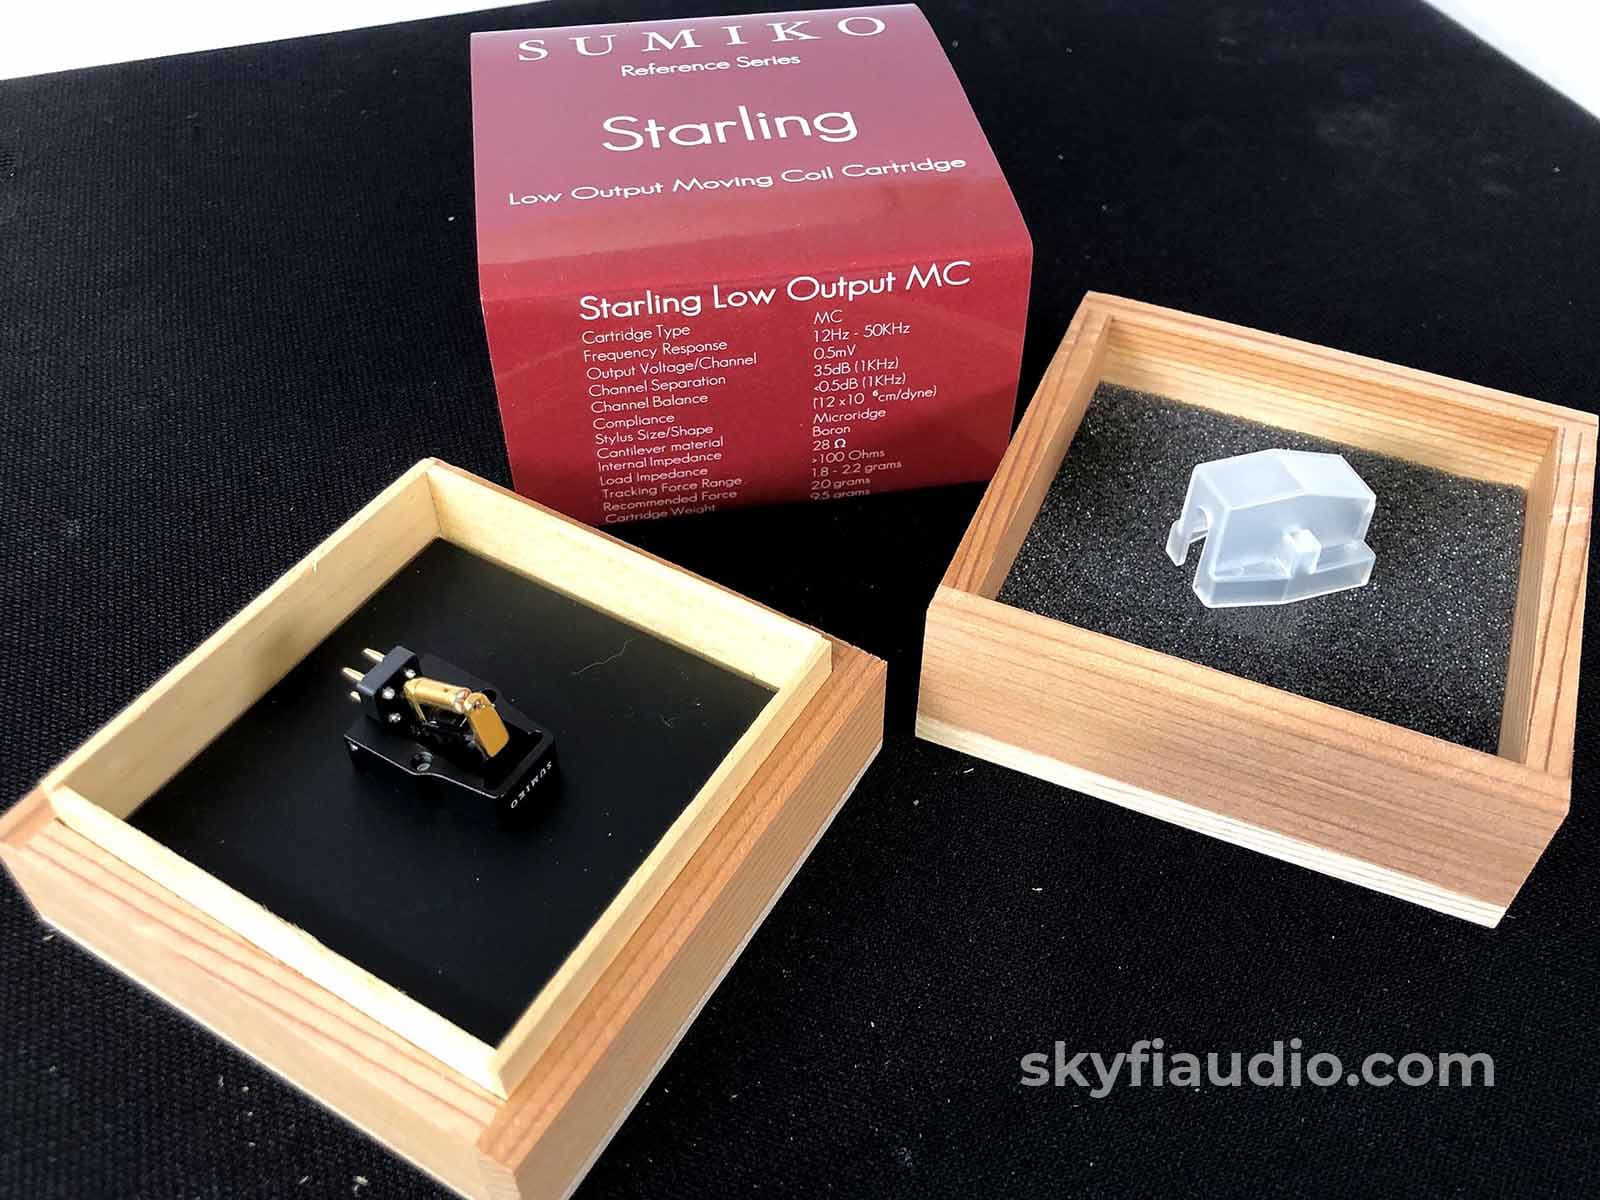 Sumiko Starling Phono Cartridge New